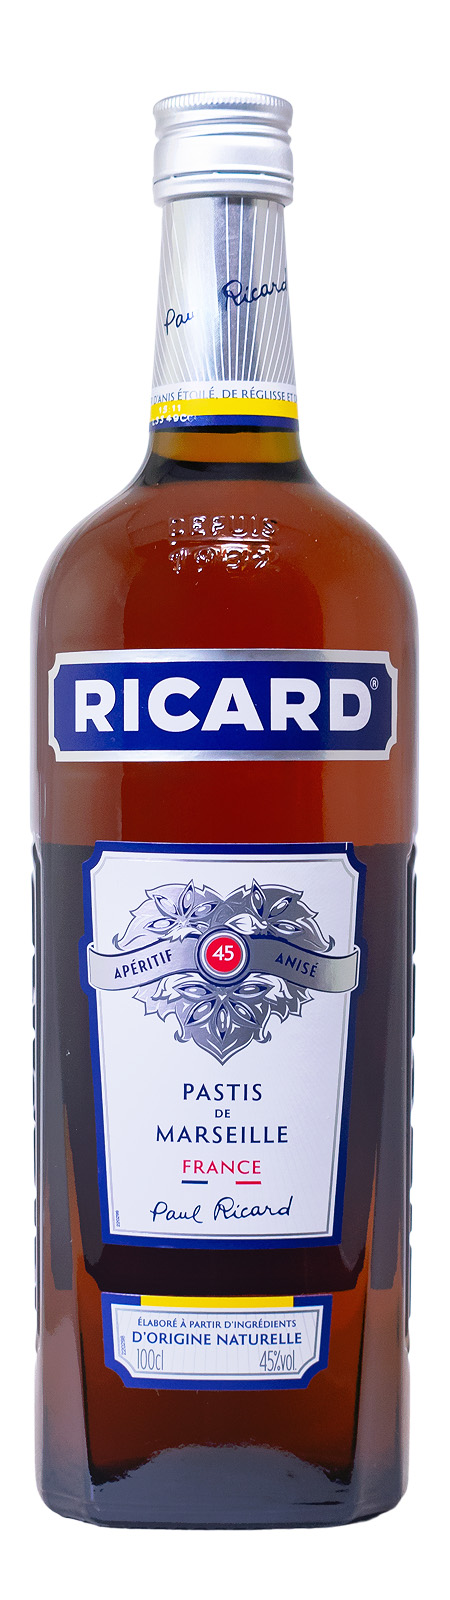 Ricard Pastis de Marseille - 1 Liter 45% vol